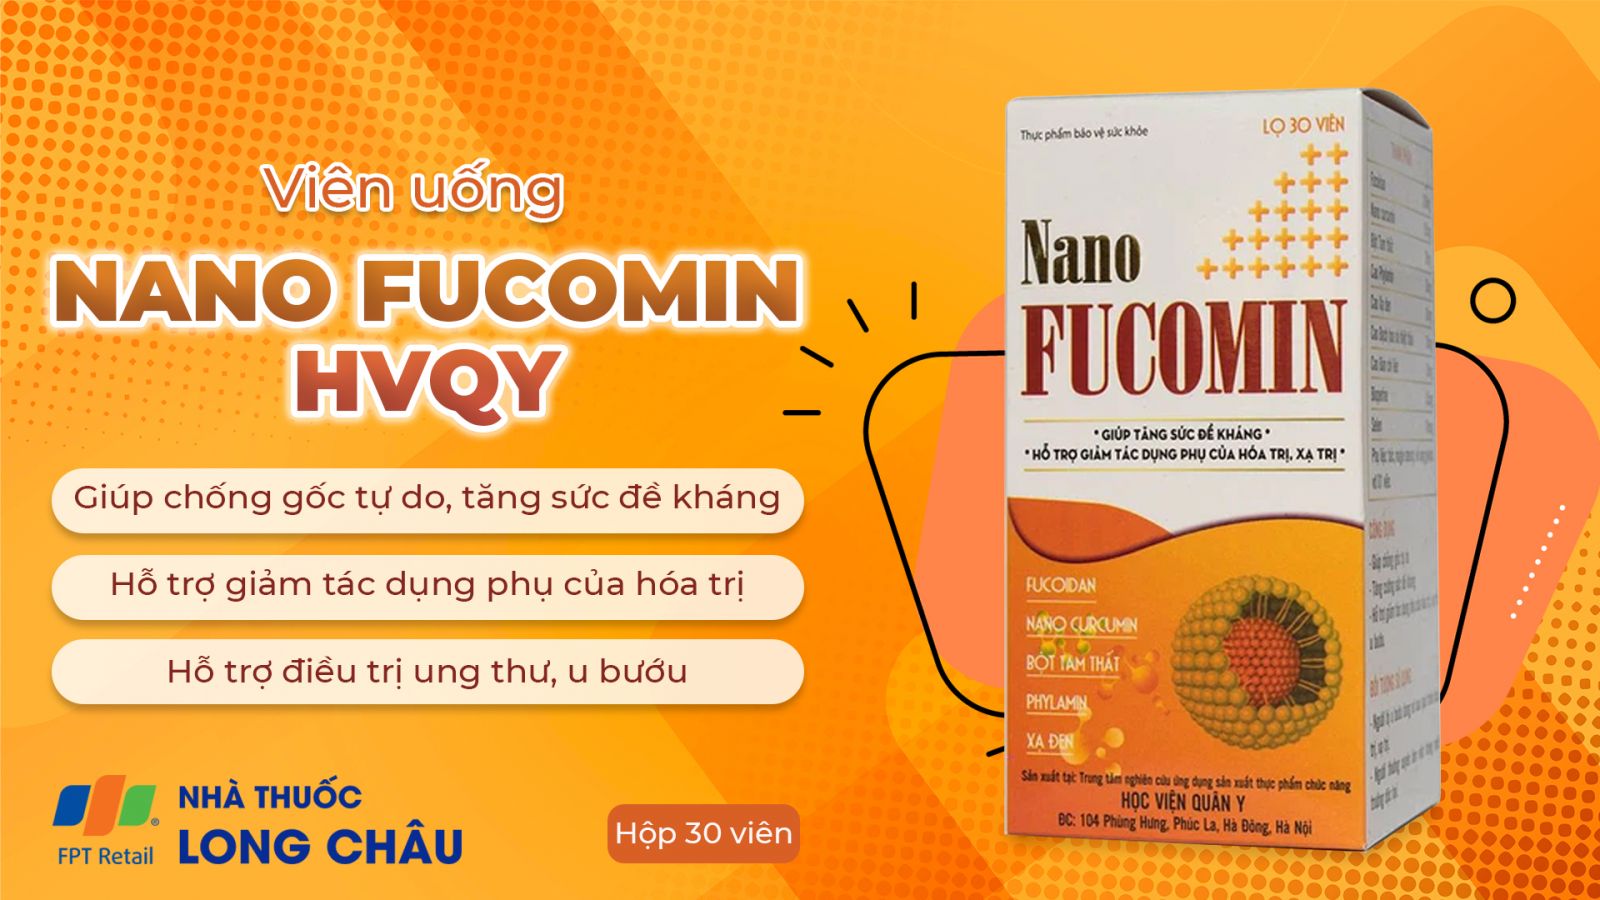 Nano Fucomin 2